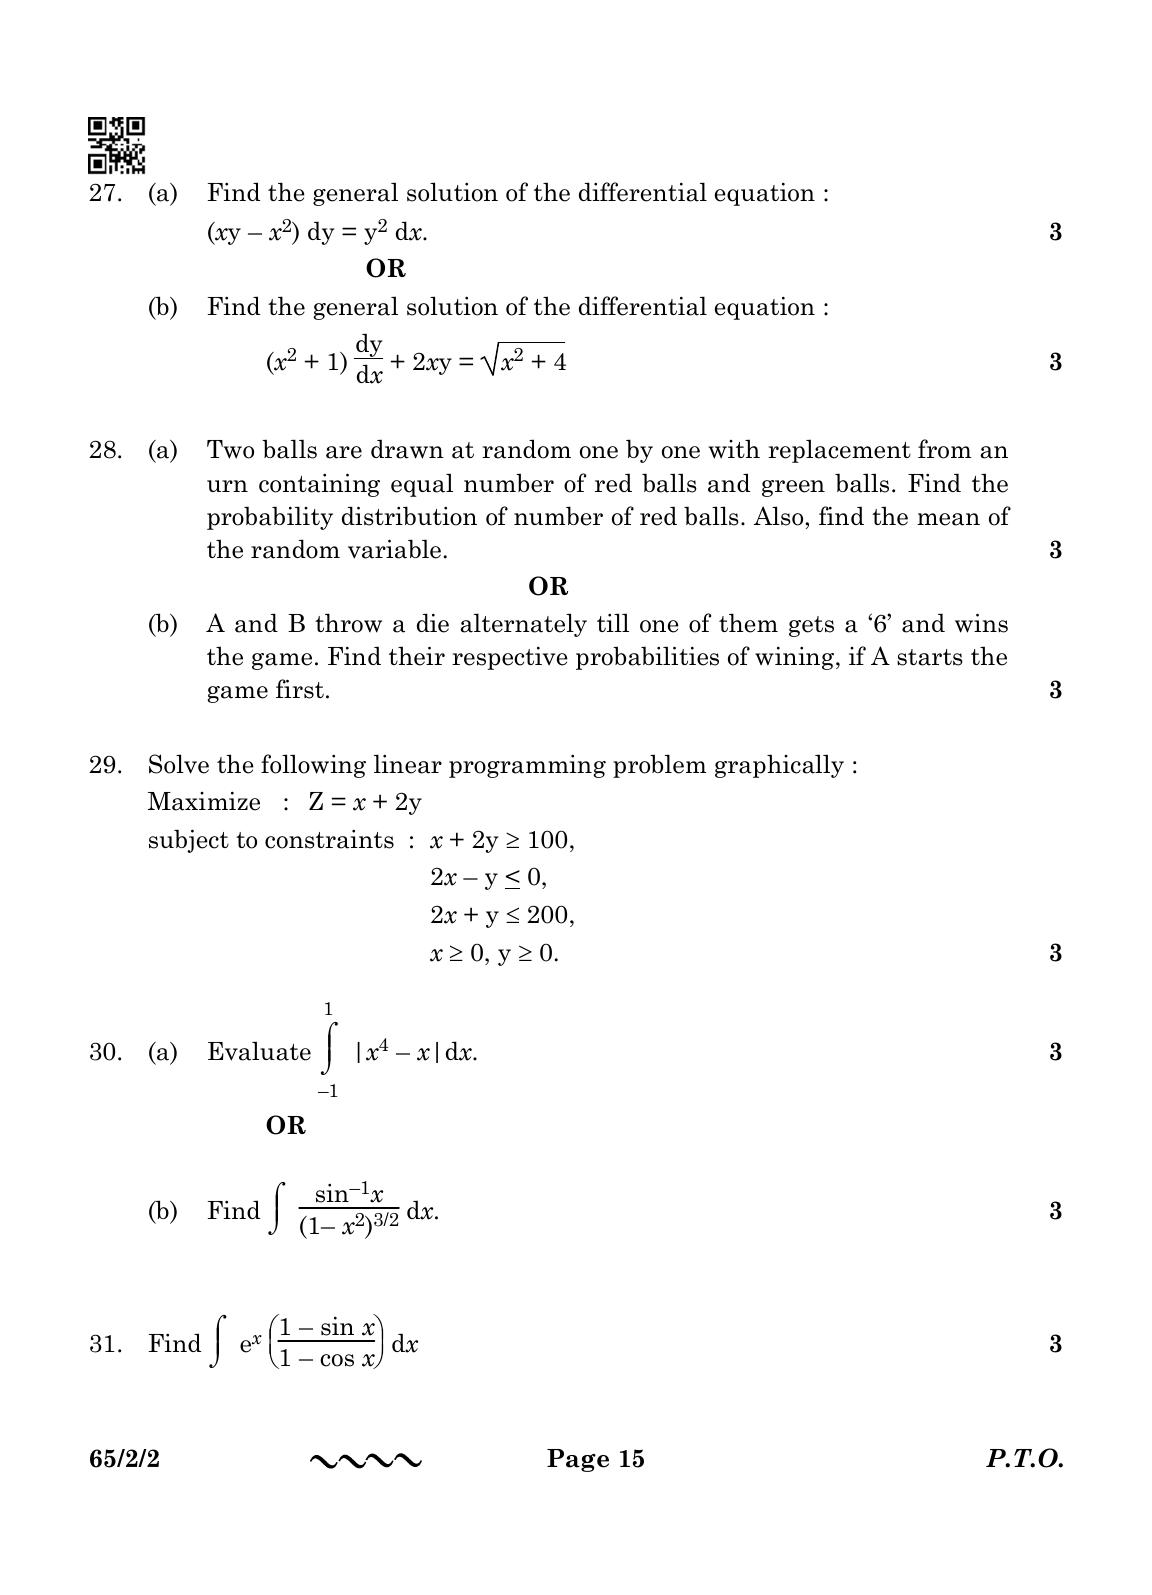 CBSE Class 12 65-2-2 MATHEMATICS 2023 Question Paper - Page 15